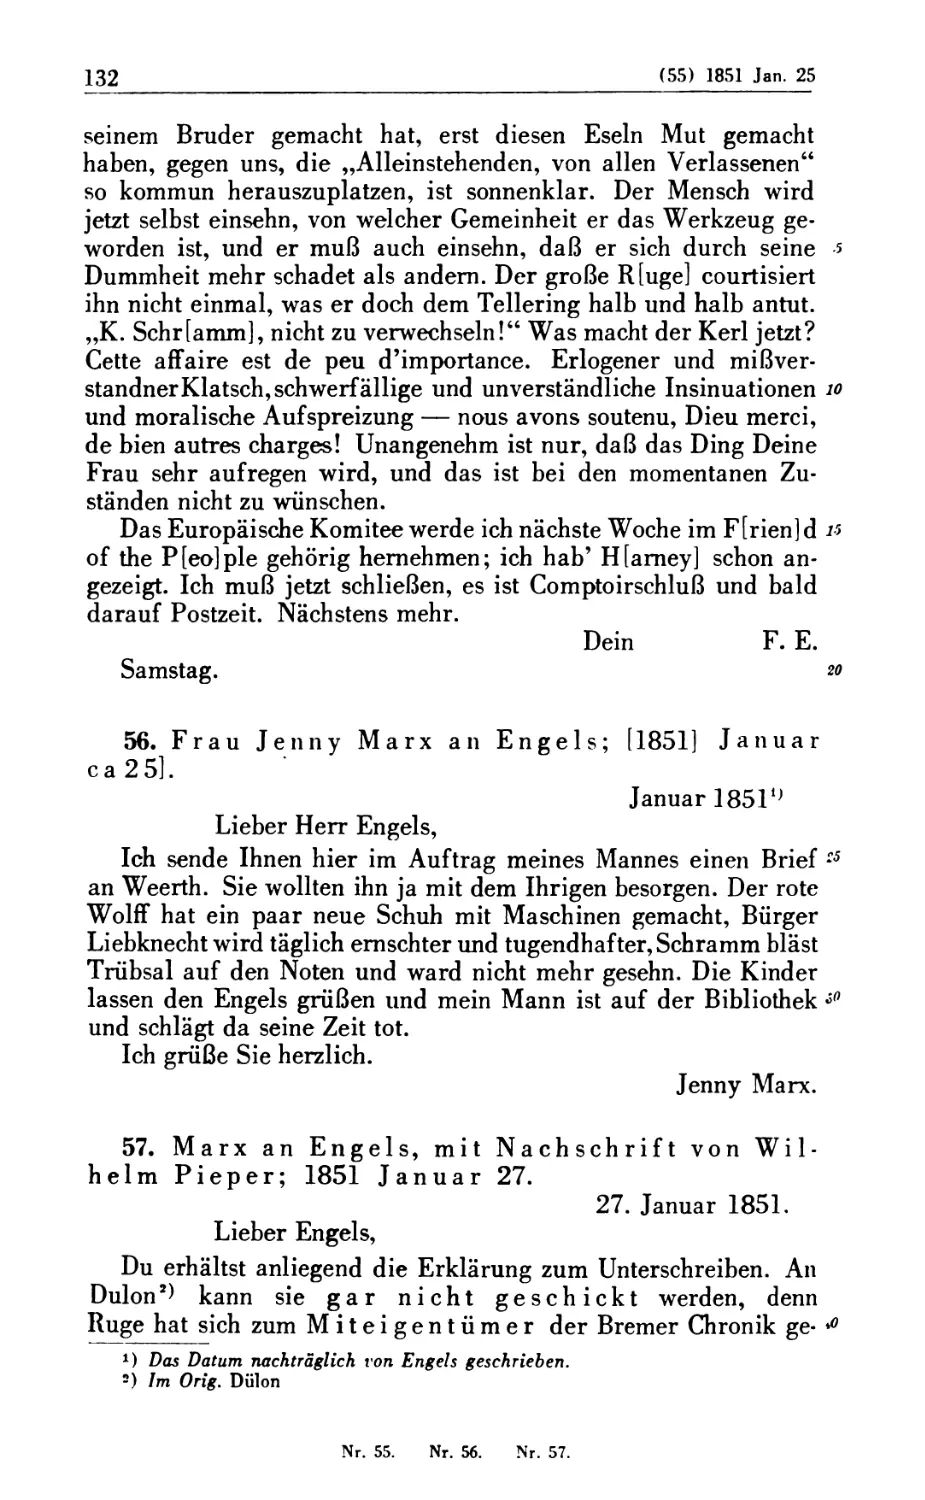 56. Frau Jenny Marx an Engels; [1851] Januar ca. 25
57. Marx an Engels, mit Nachschrift von Wilhelm Pieper; 1851 Januar 27